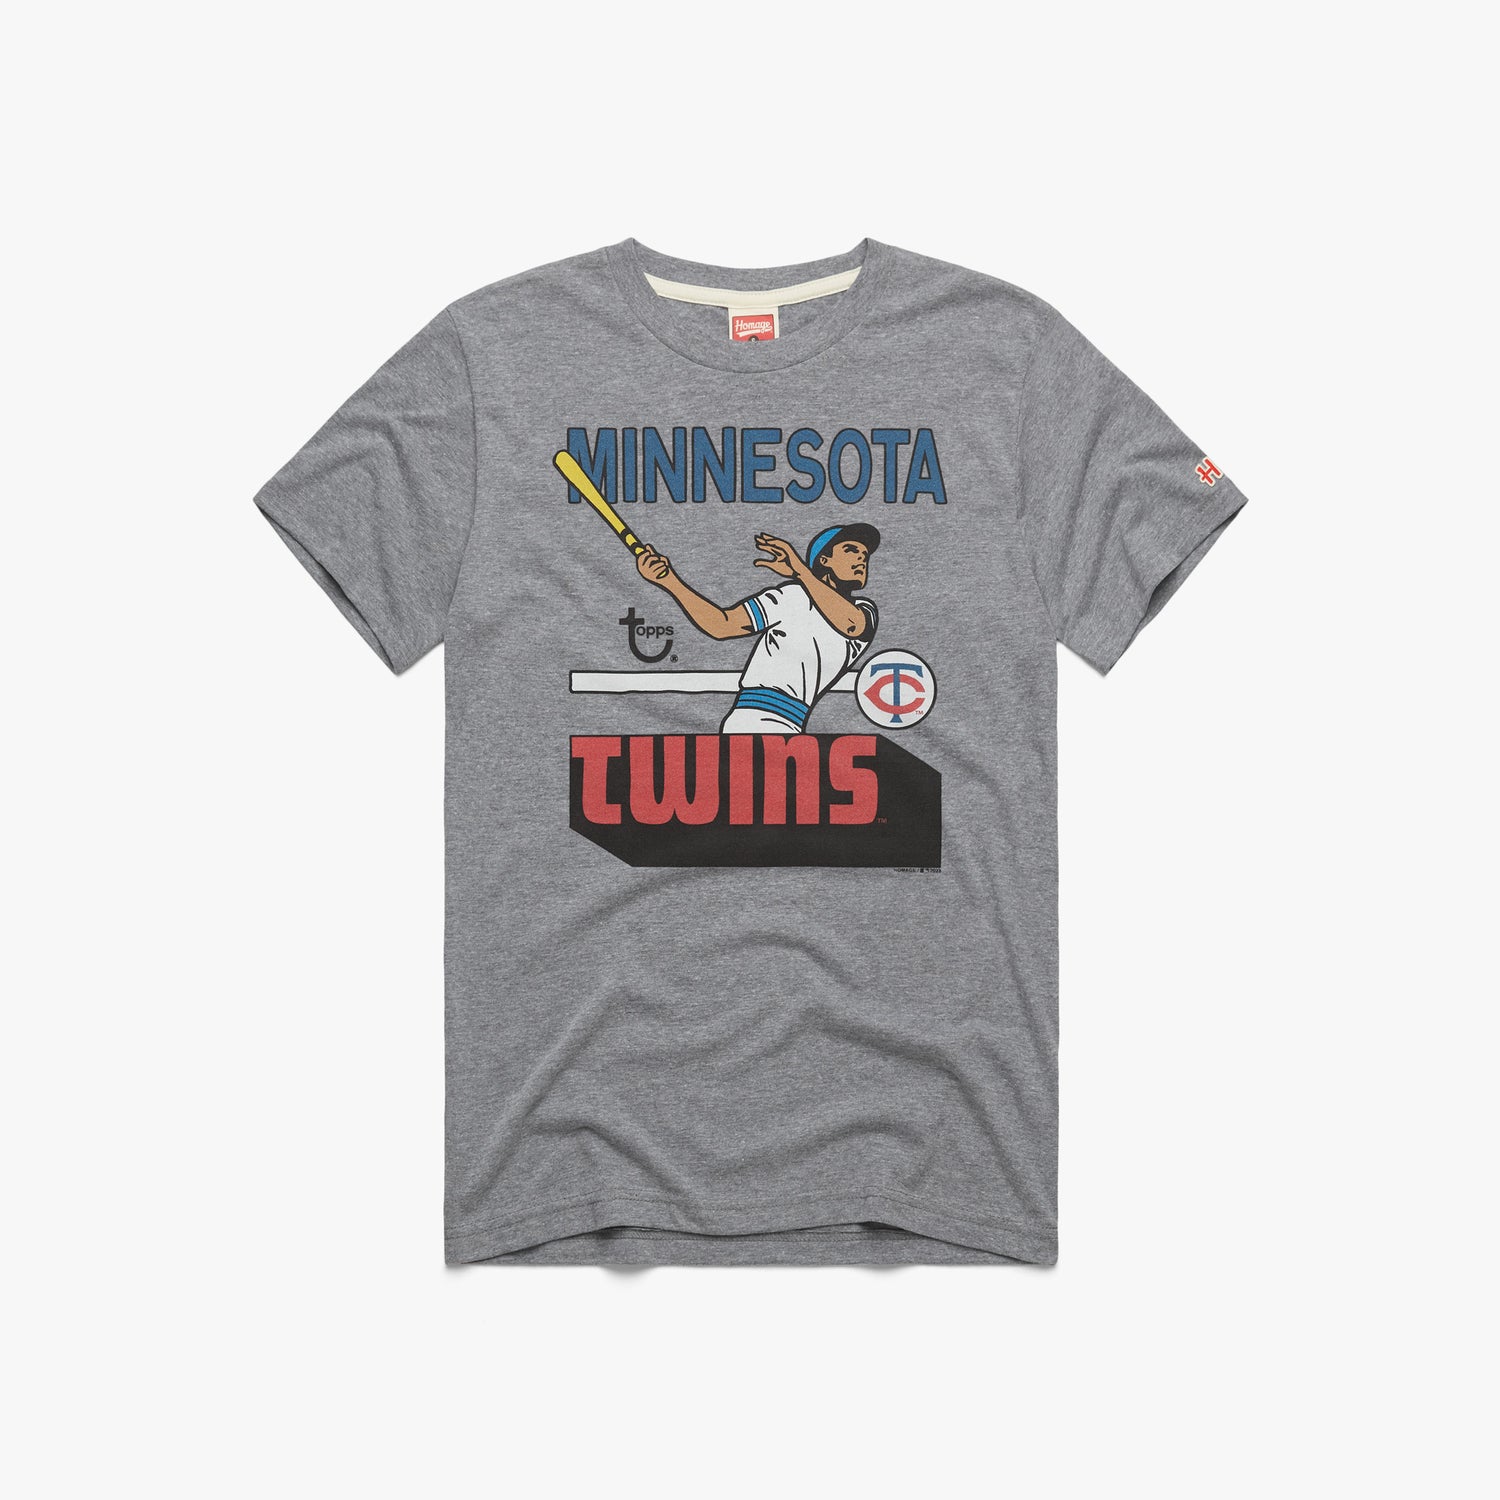 MLB Logo Bowling Ball - Minnesota Twins